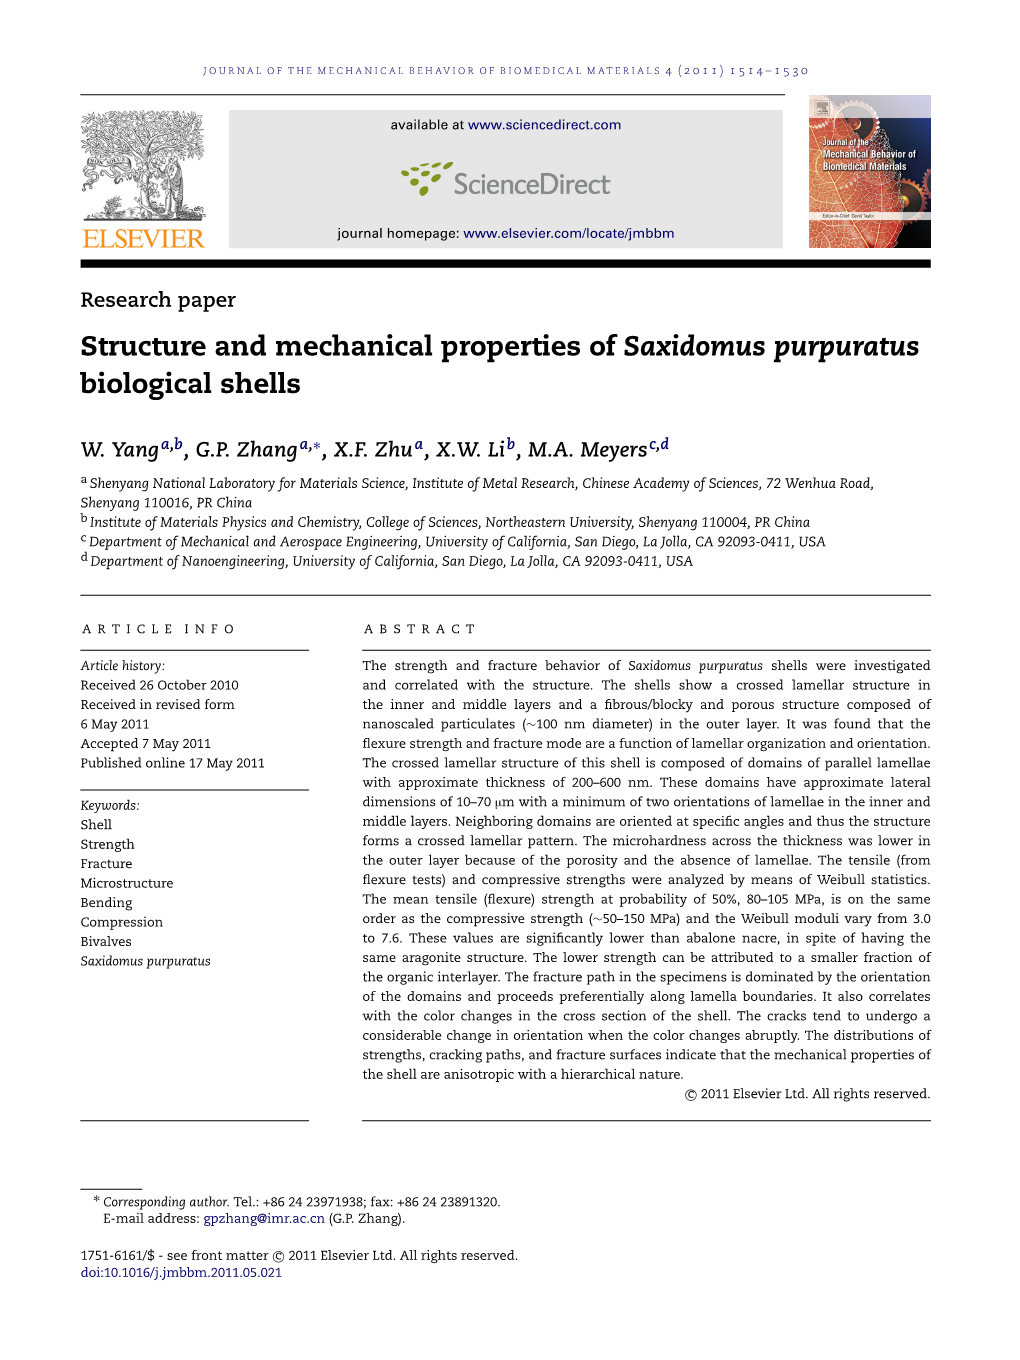 Structure and Mechanical Properties of Saxidomus Purpuratus Biological Shells